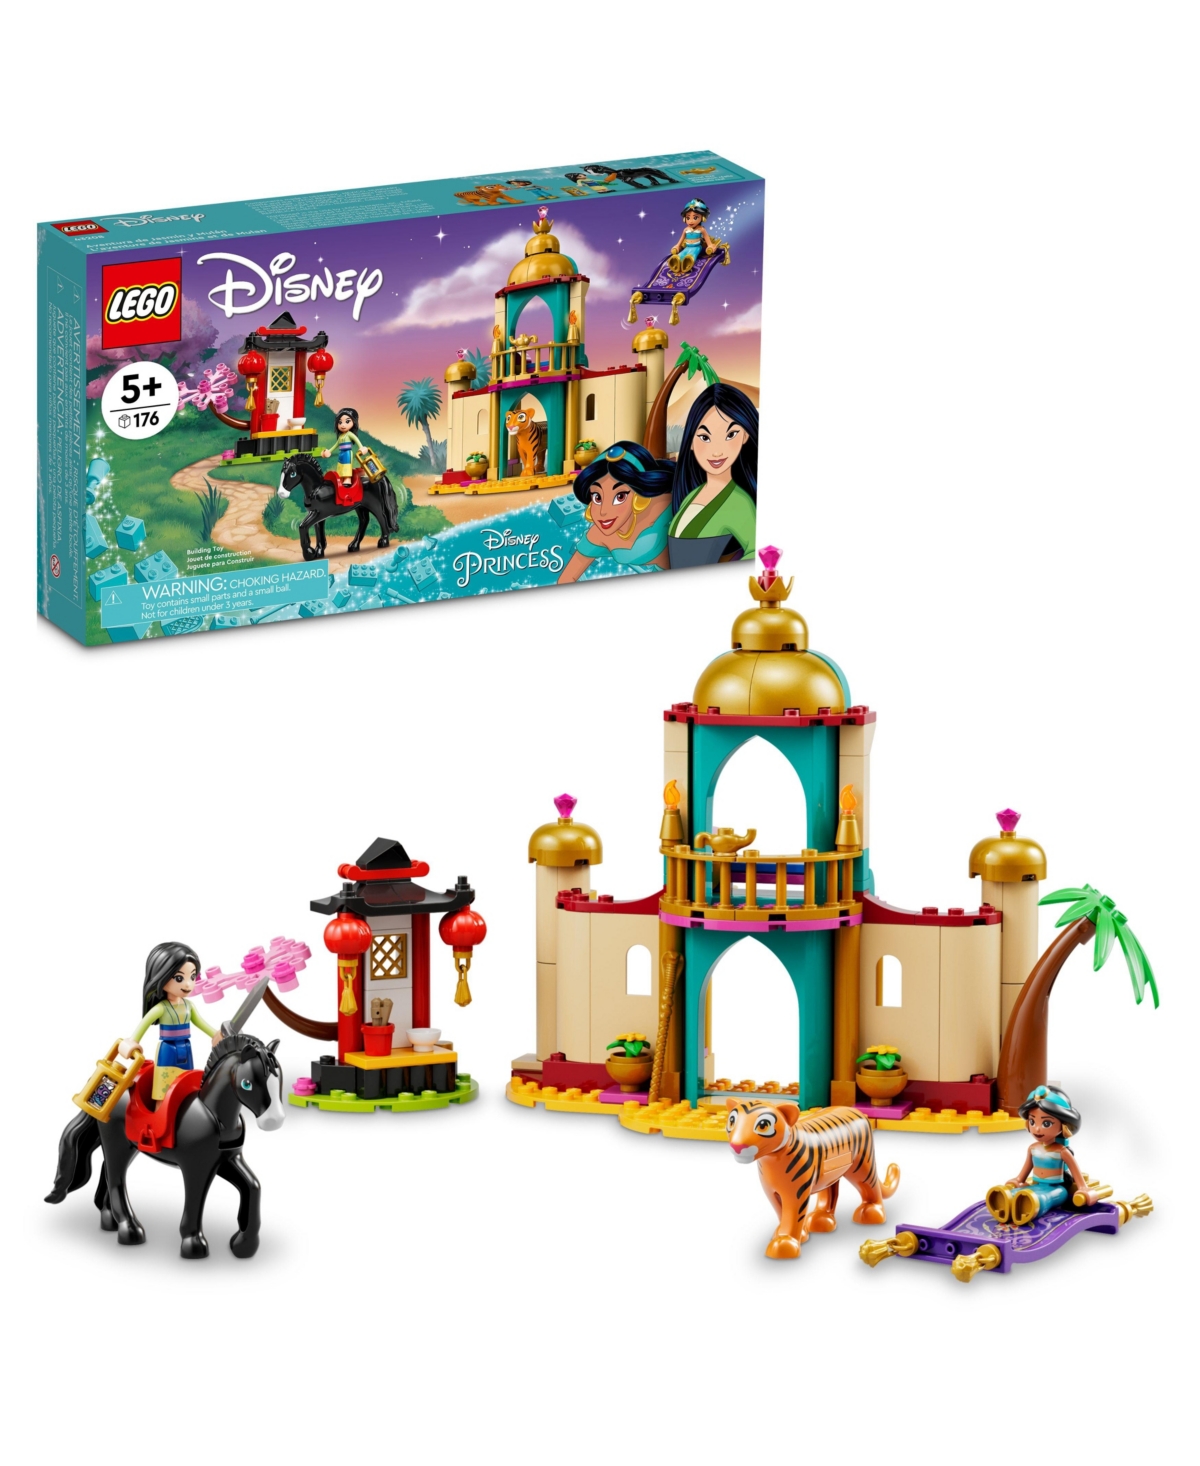 Lego Disney Princess Jasmine And Mulan's Adventure 43208 Building Set, 176 Pieces In Multiple